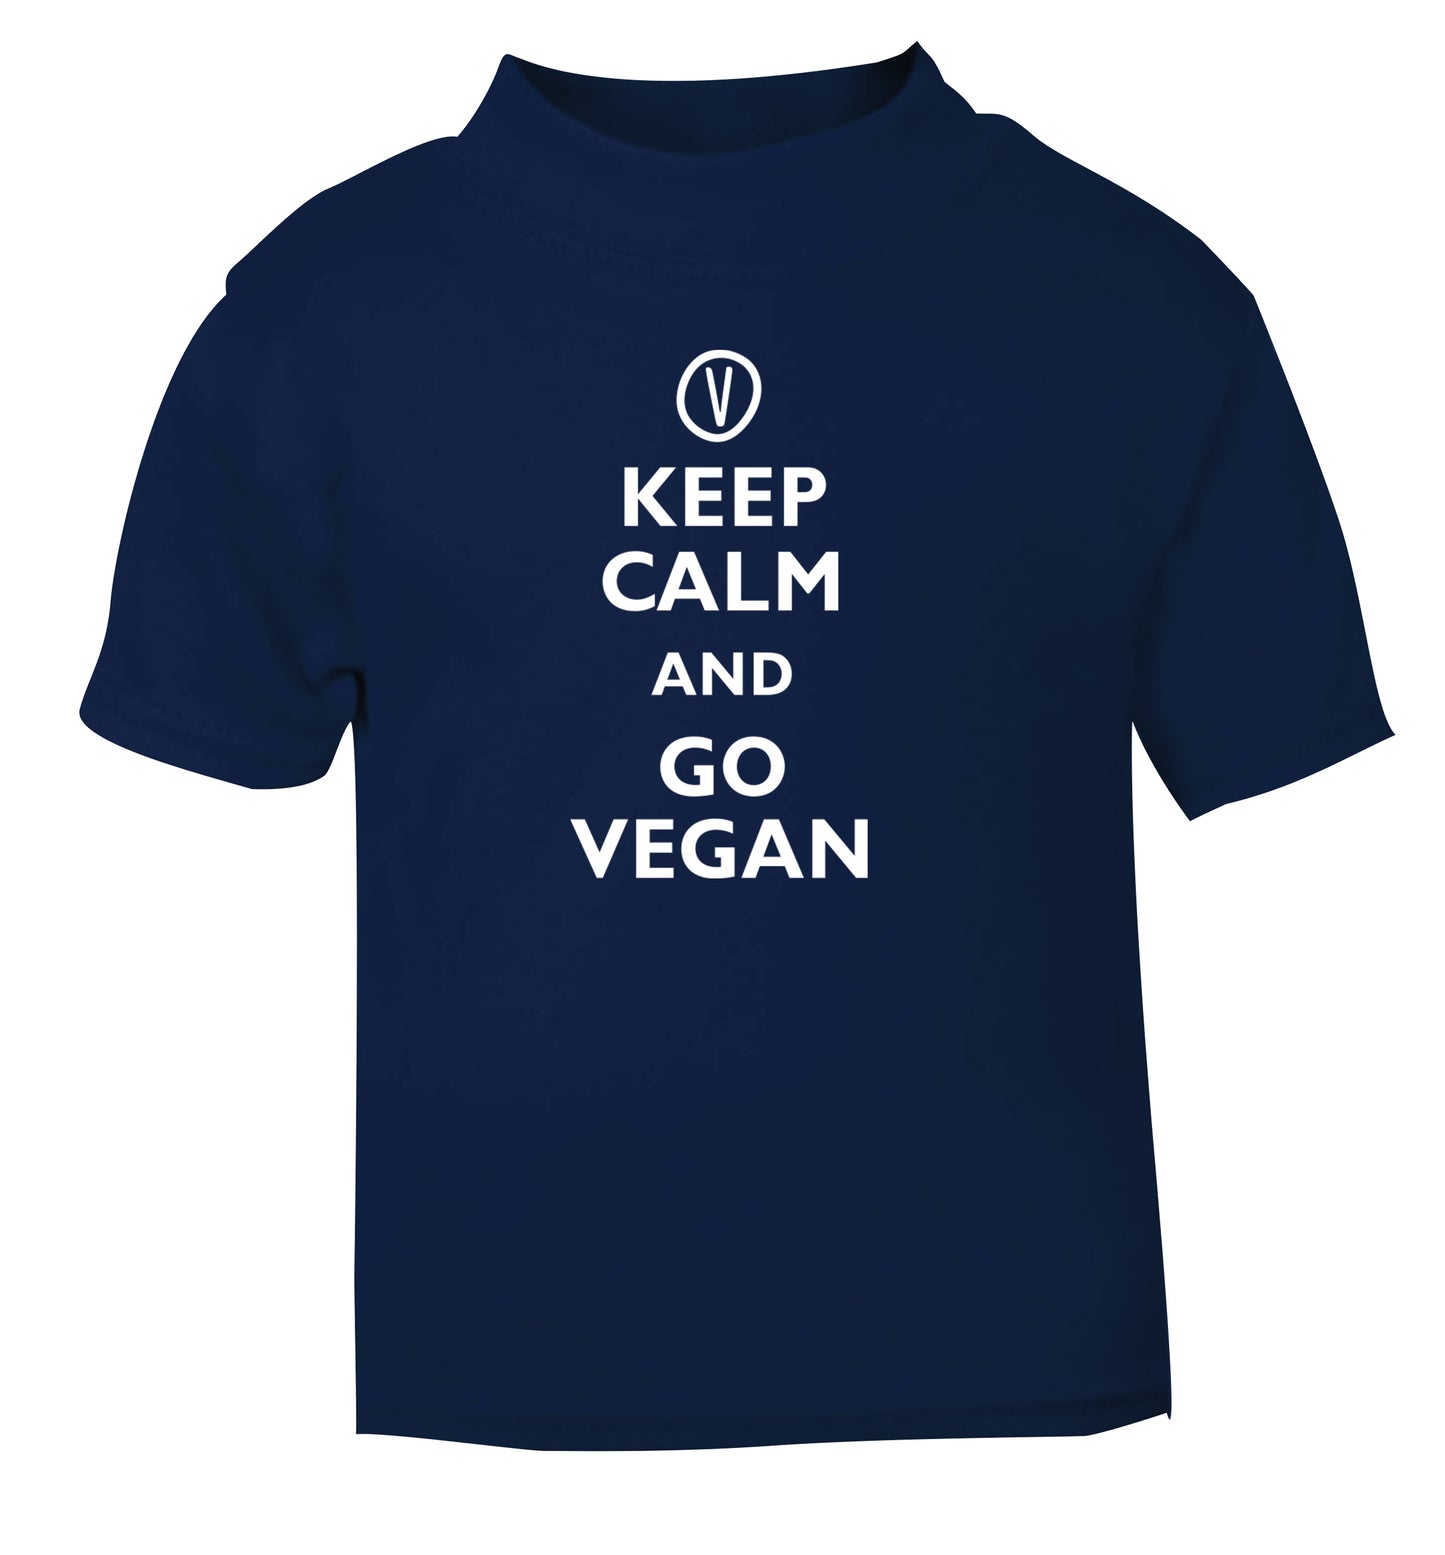 Keep calm and go vegan navy Baby Toddler Tshirt 2 Years